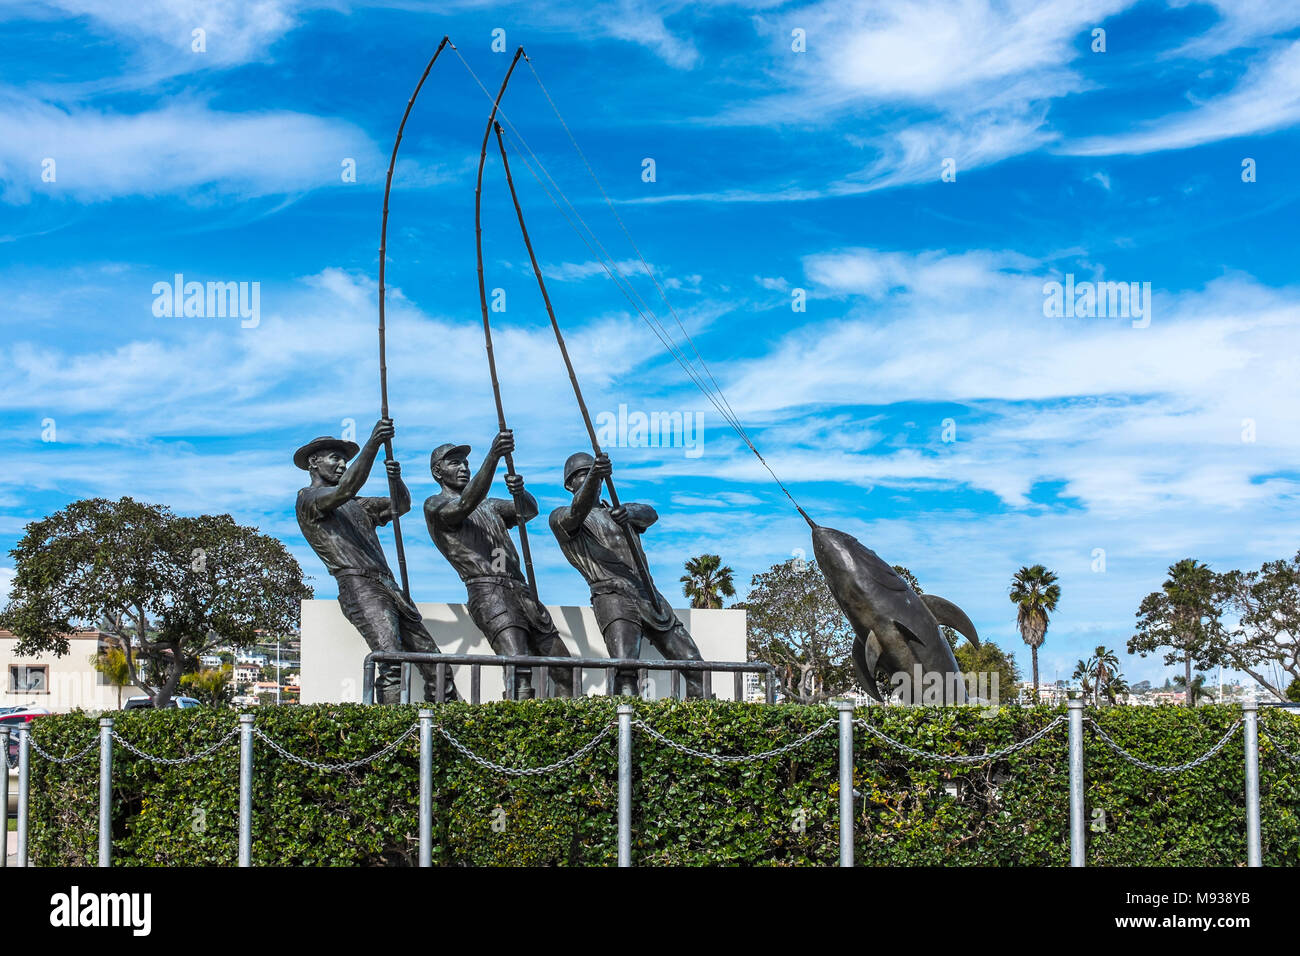 SAN DIEGO, CALIFORNIA, USA - Tunaman's Memorial  bronze sculpture of three tuna fishermen on Shelter Island in San Diego Bay. Stock Photo